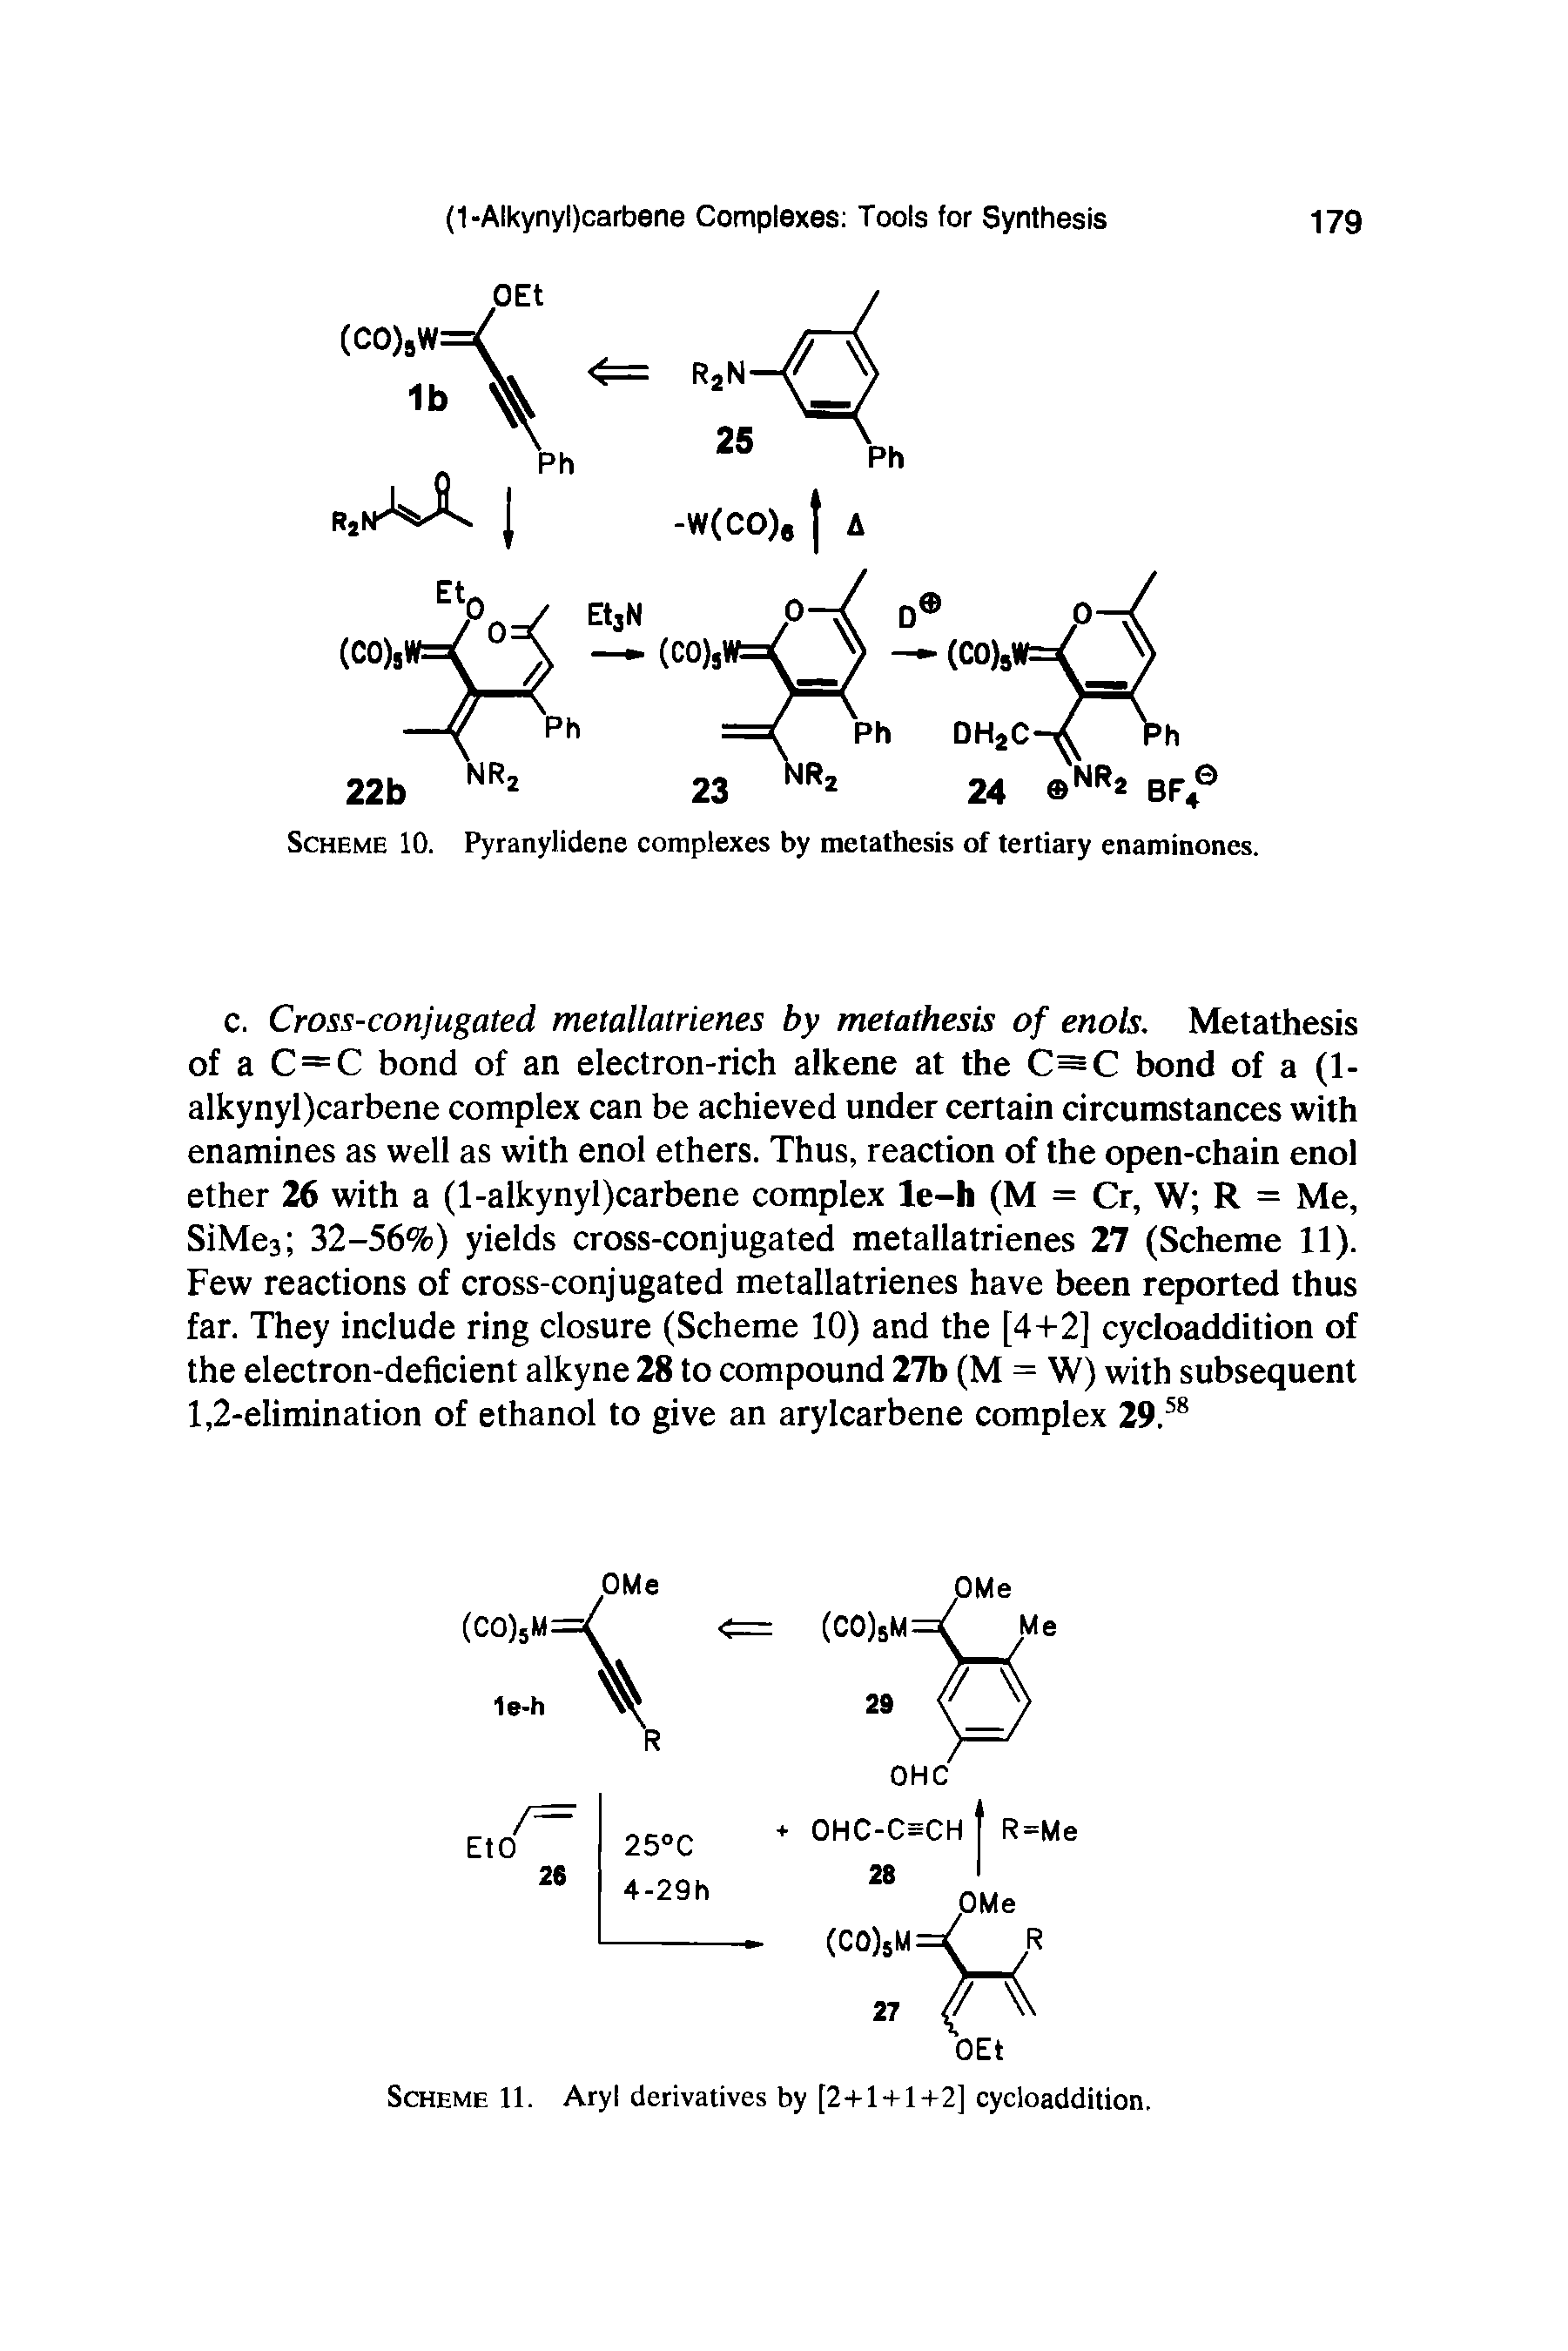 Scheme 10. Pyranylidene complexes by metathesis of tertiary enaminones.